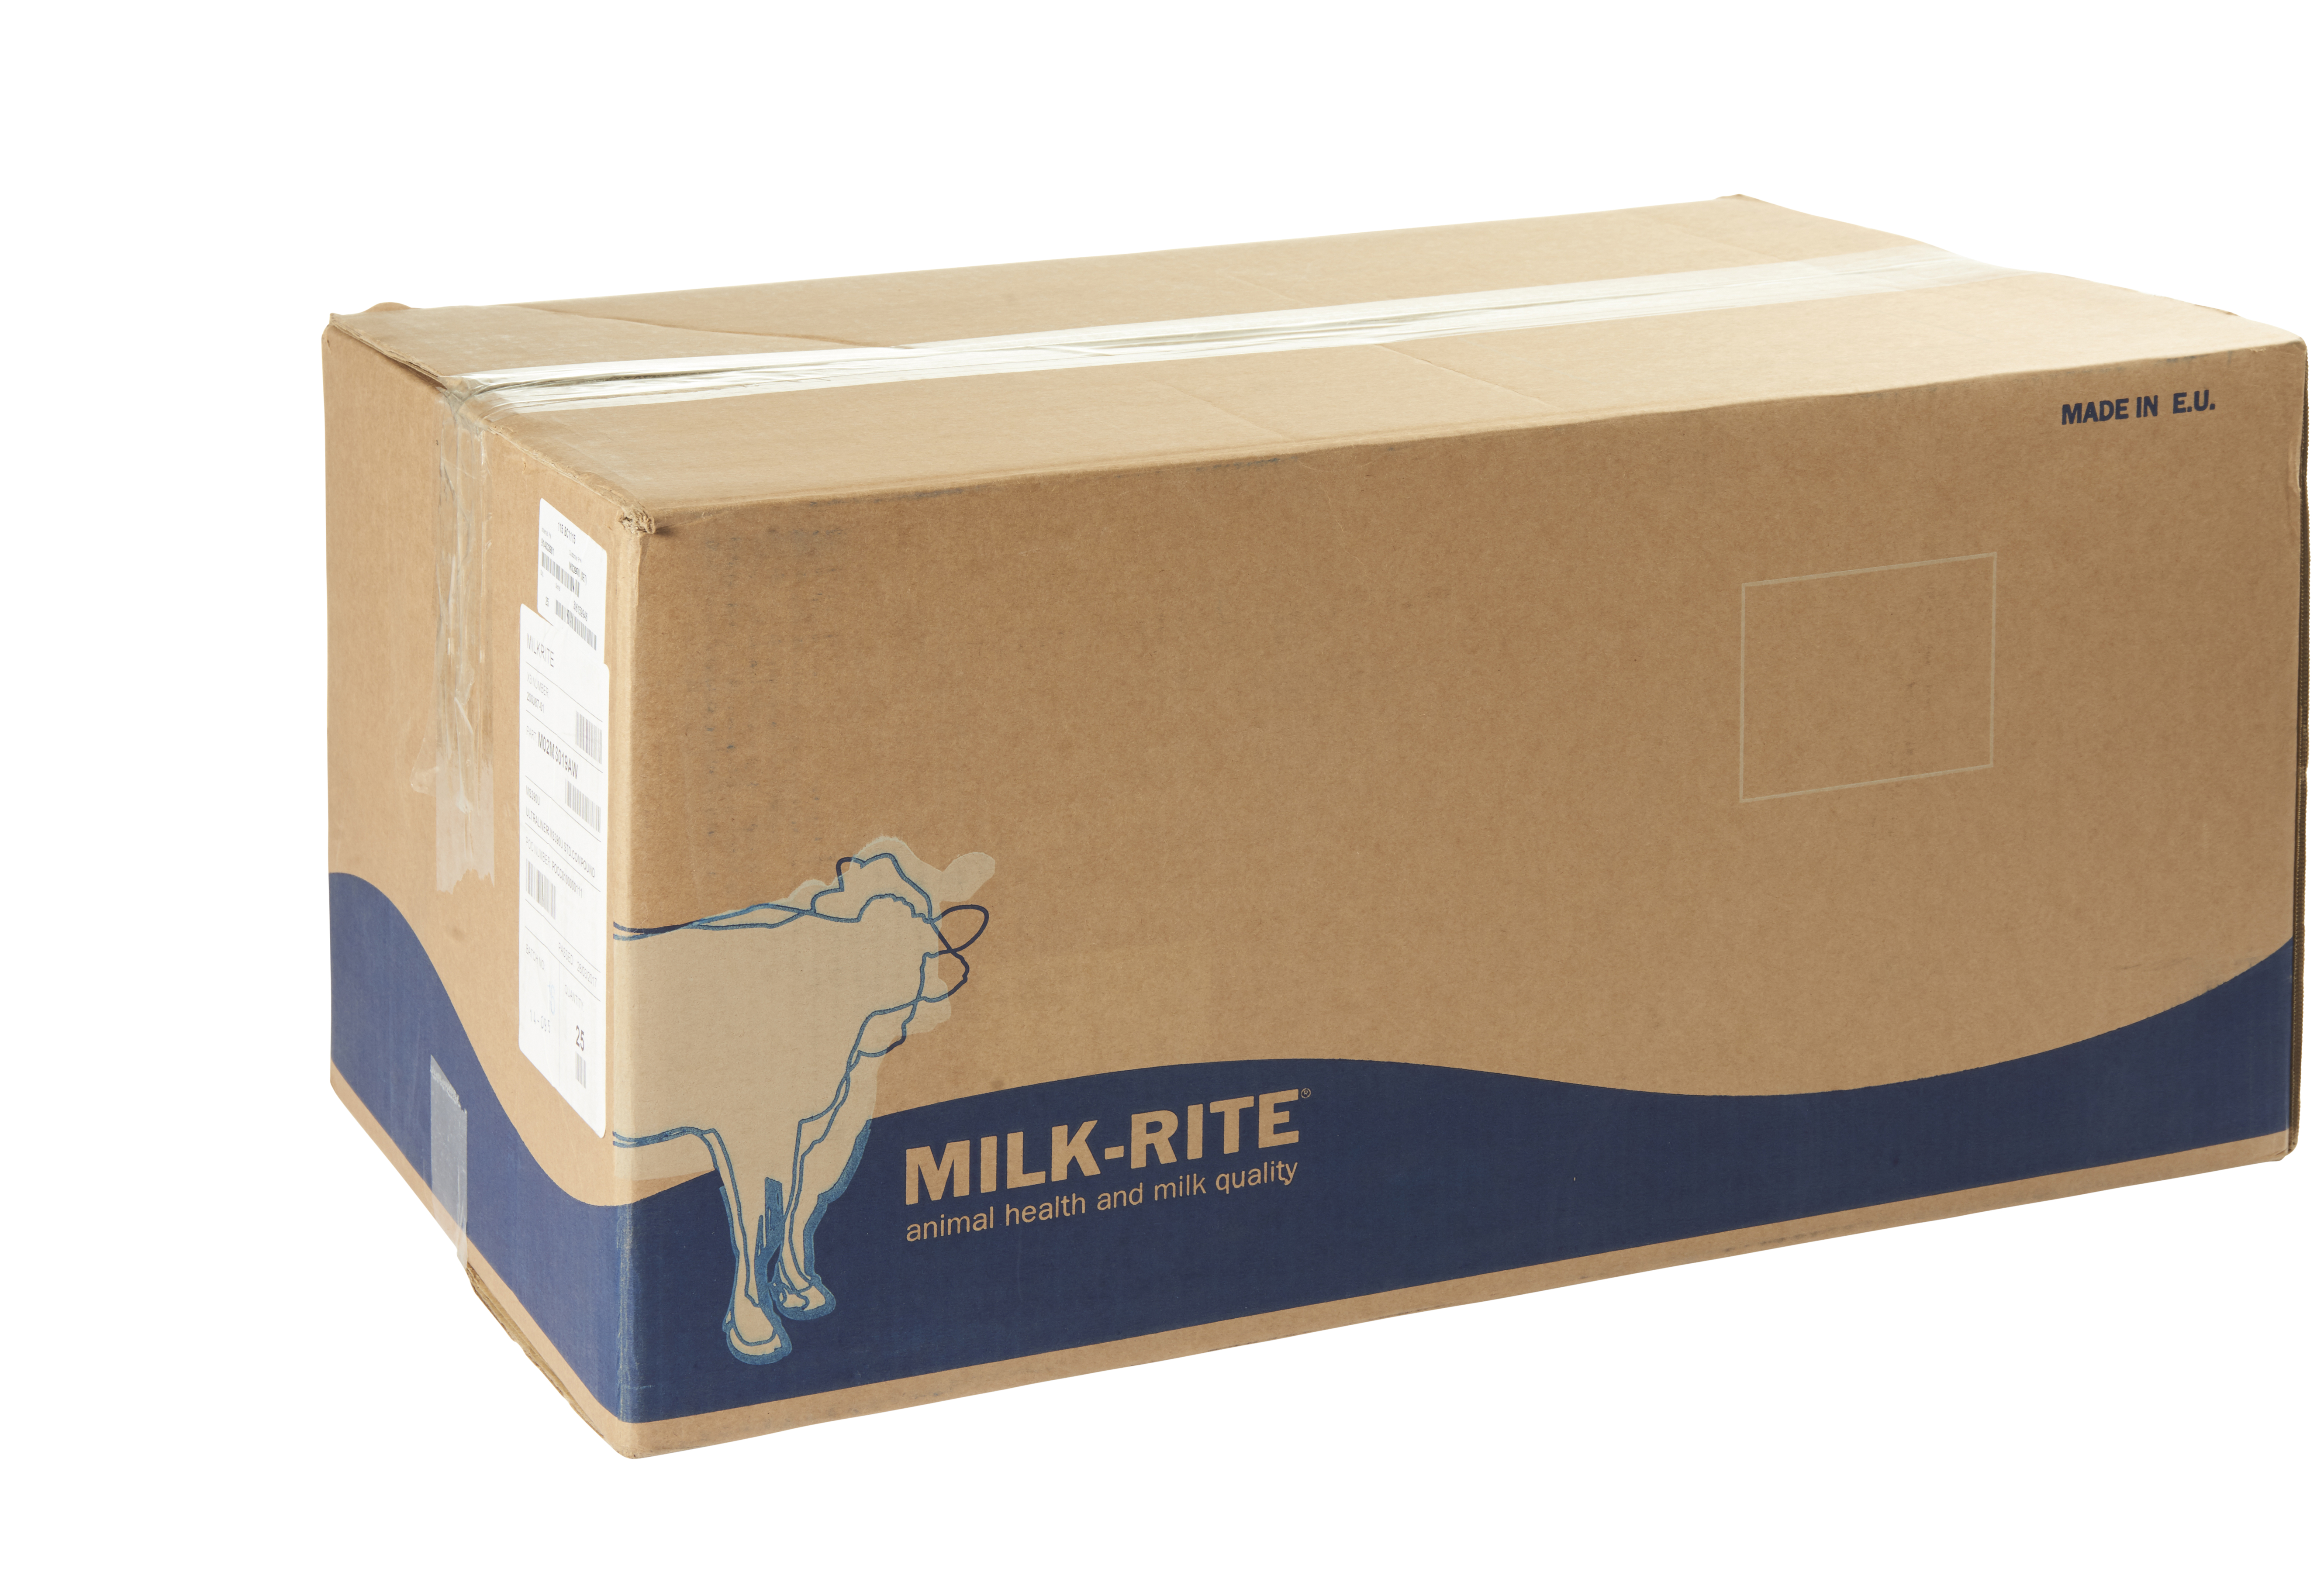 Zitzengummi Milk-Rite WS120U à 4 Stück 7023-2725-120